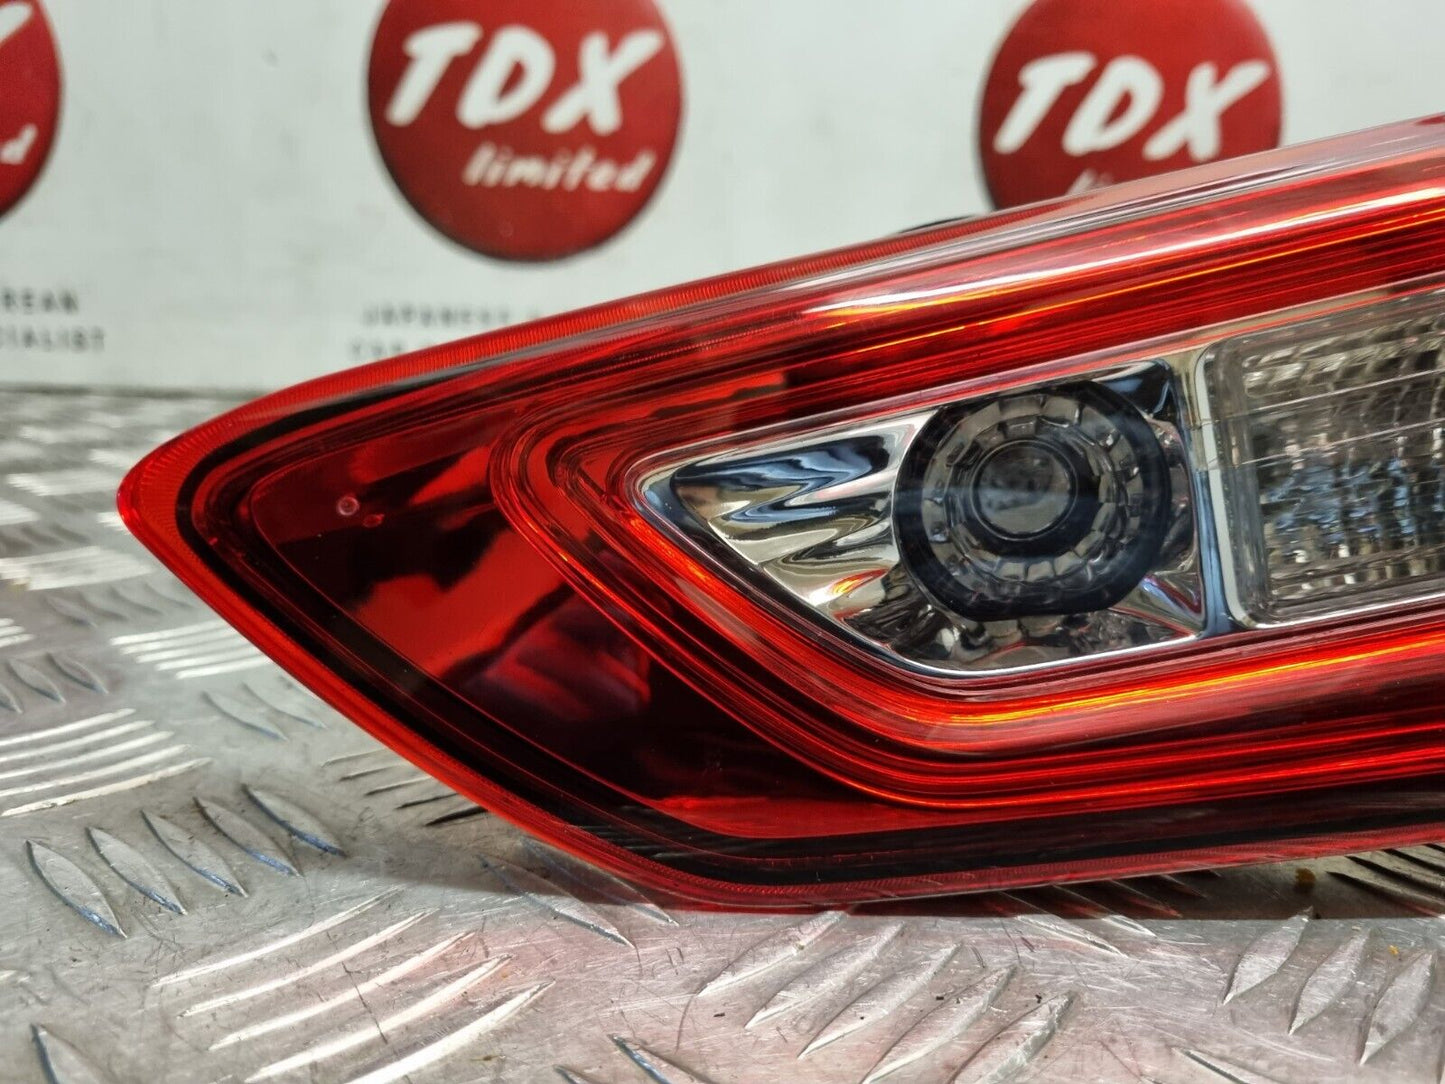 TOYOTA YARIS MK3 2017-2020 FACELIFT GENUINE DRIVERS SIDE REAR LED TAILGATE LIGHT